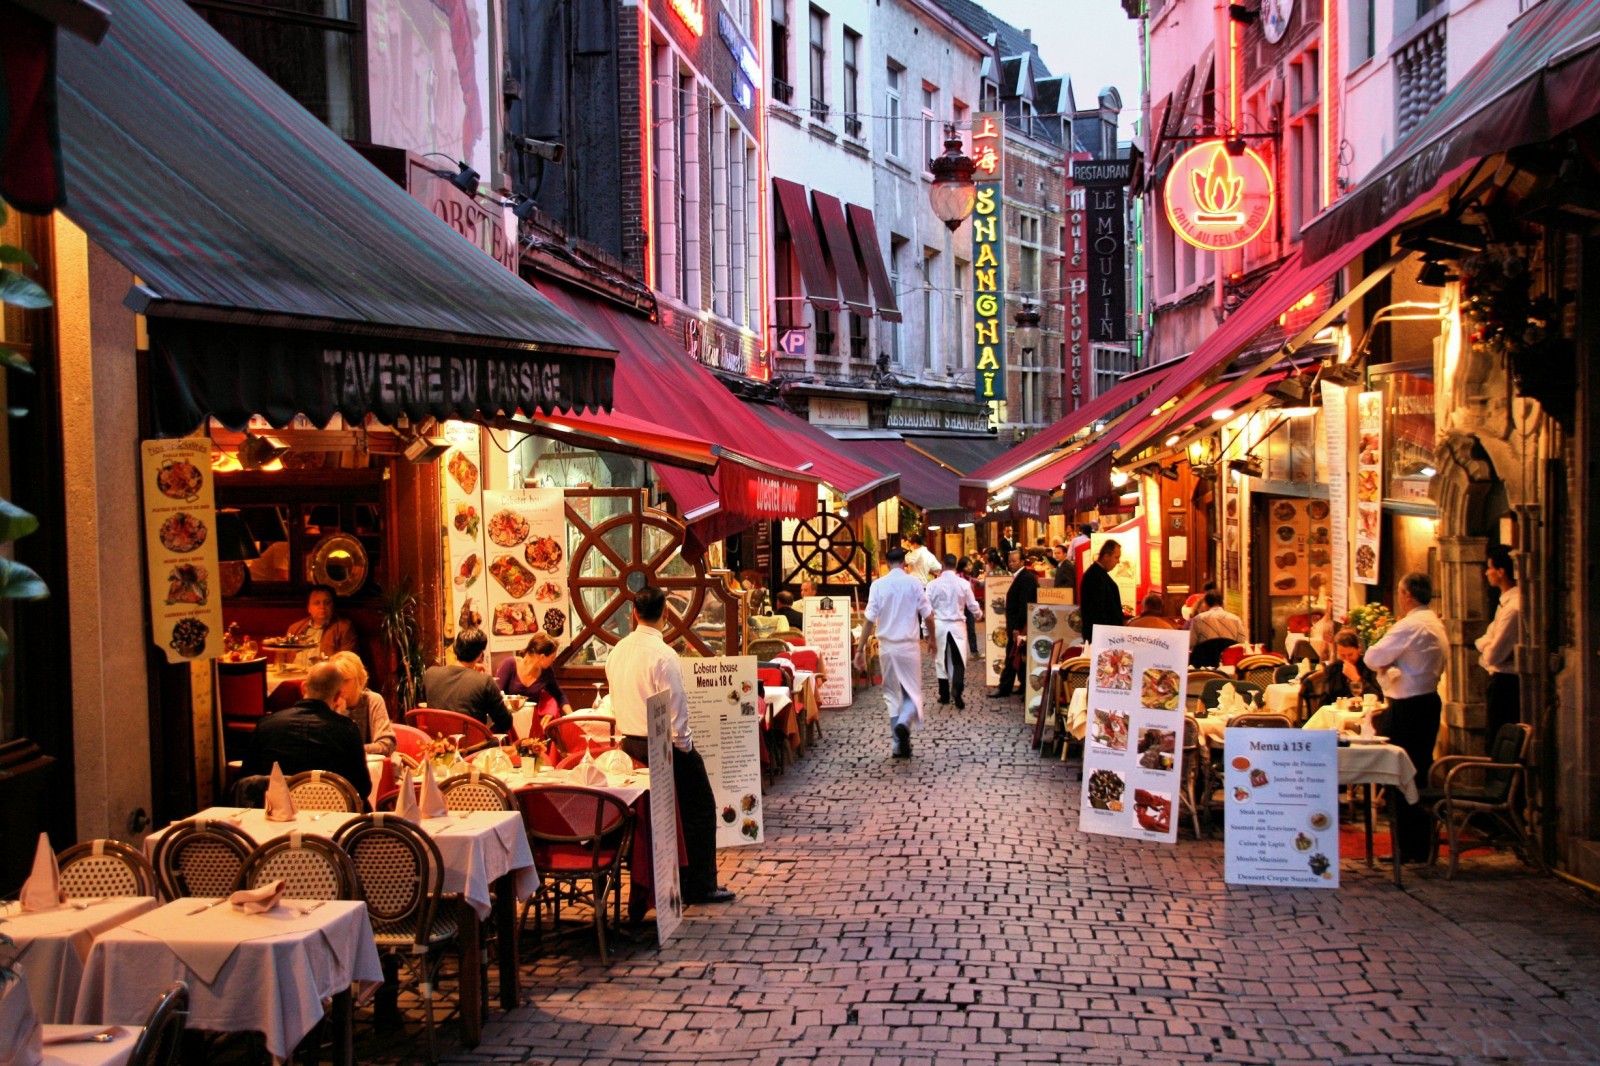 Brussels restaurants face uncertain future amid skyrocketing costs